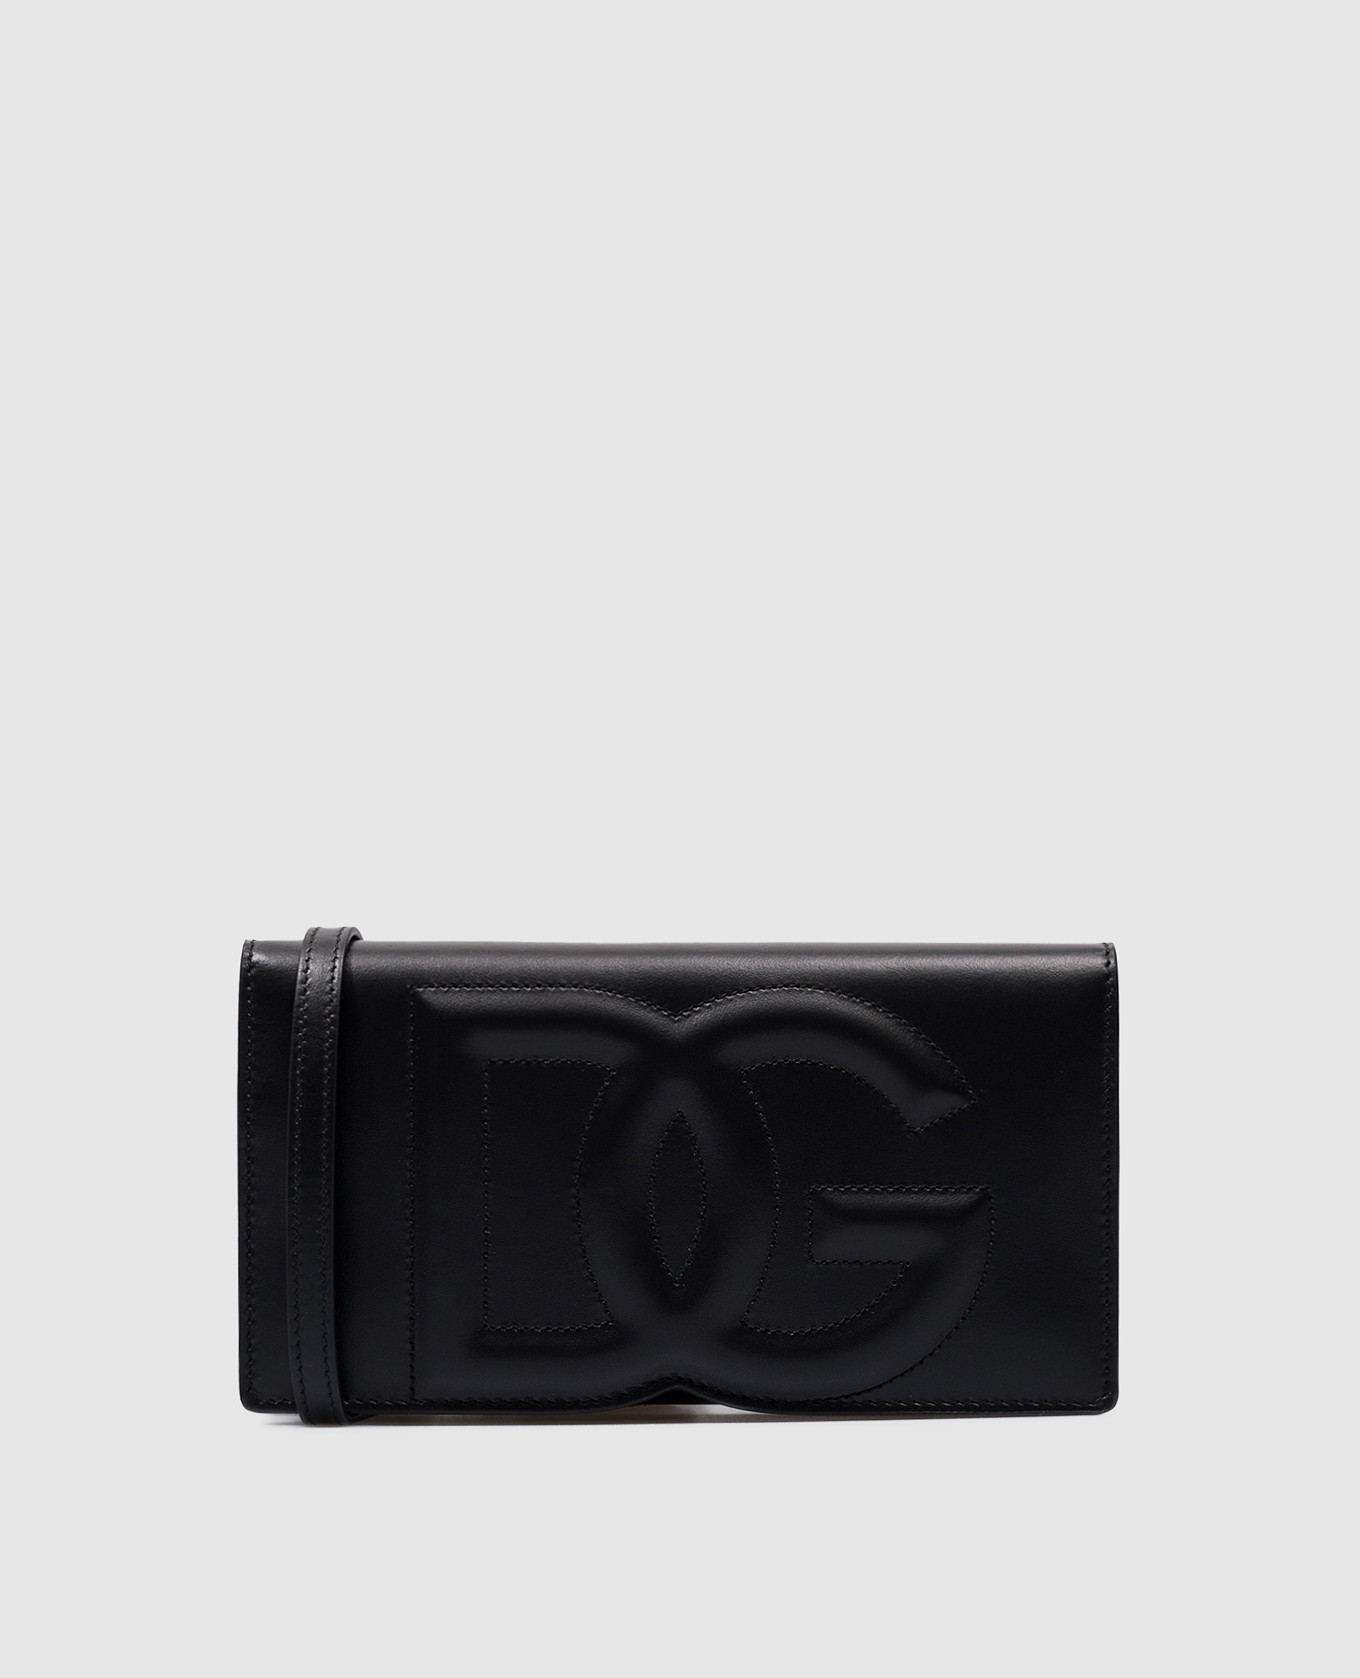 DG LOGO black leather clutch